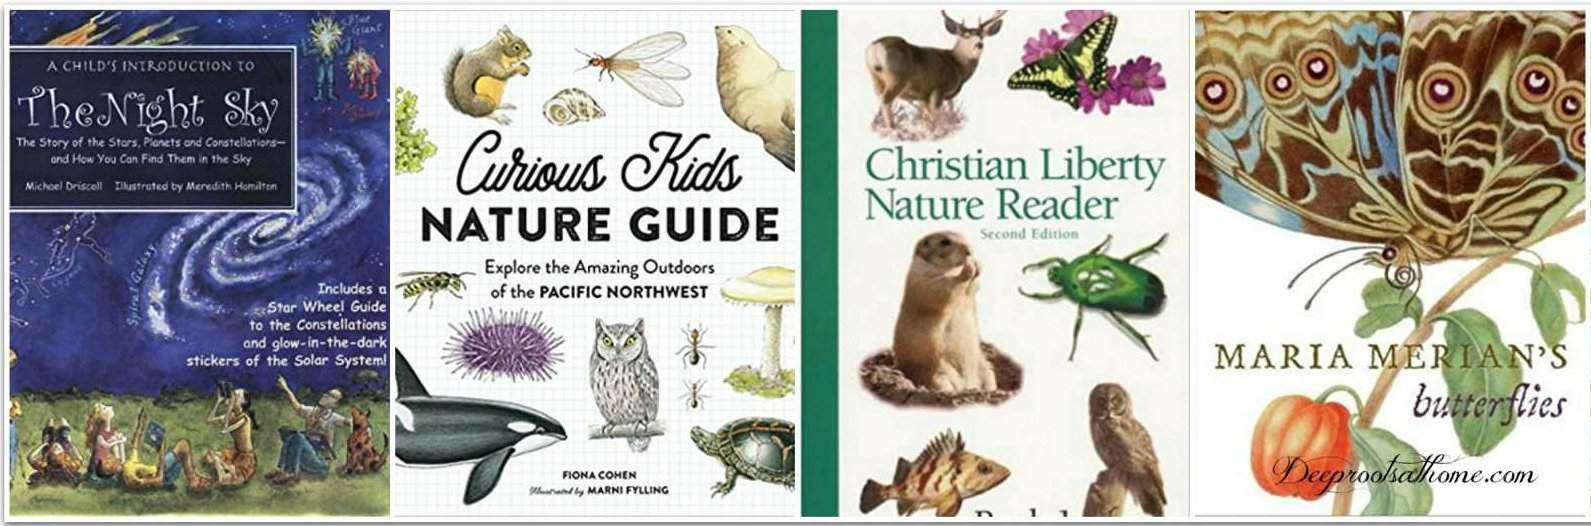 Raising Our Boys Through Nature Study & Enrichment. Nature books for teaching